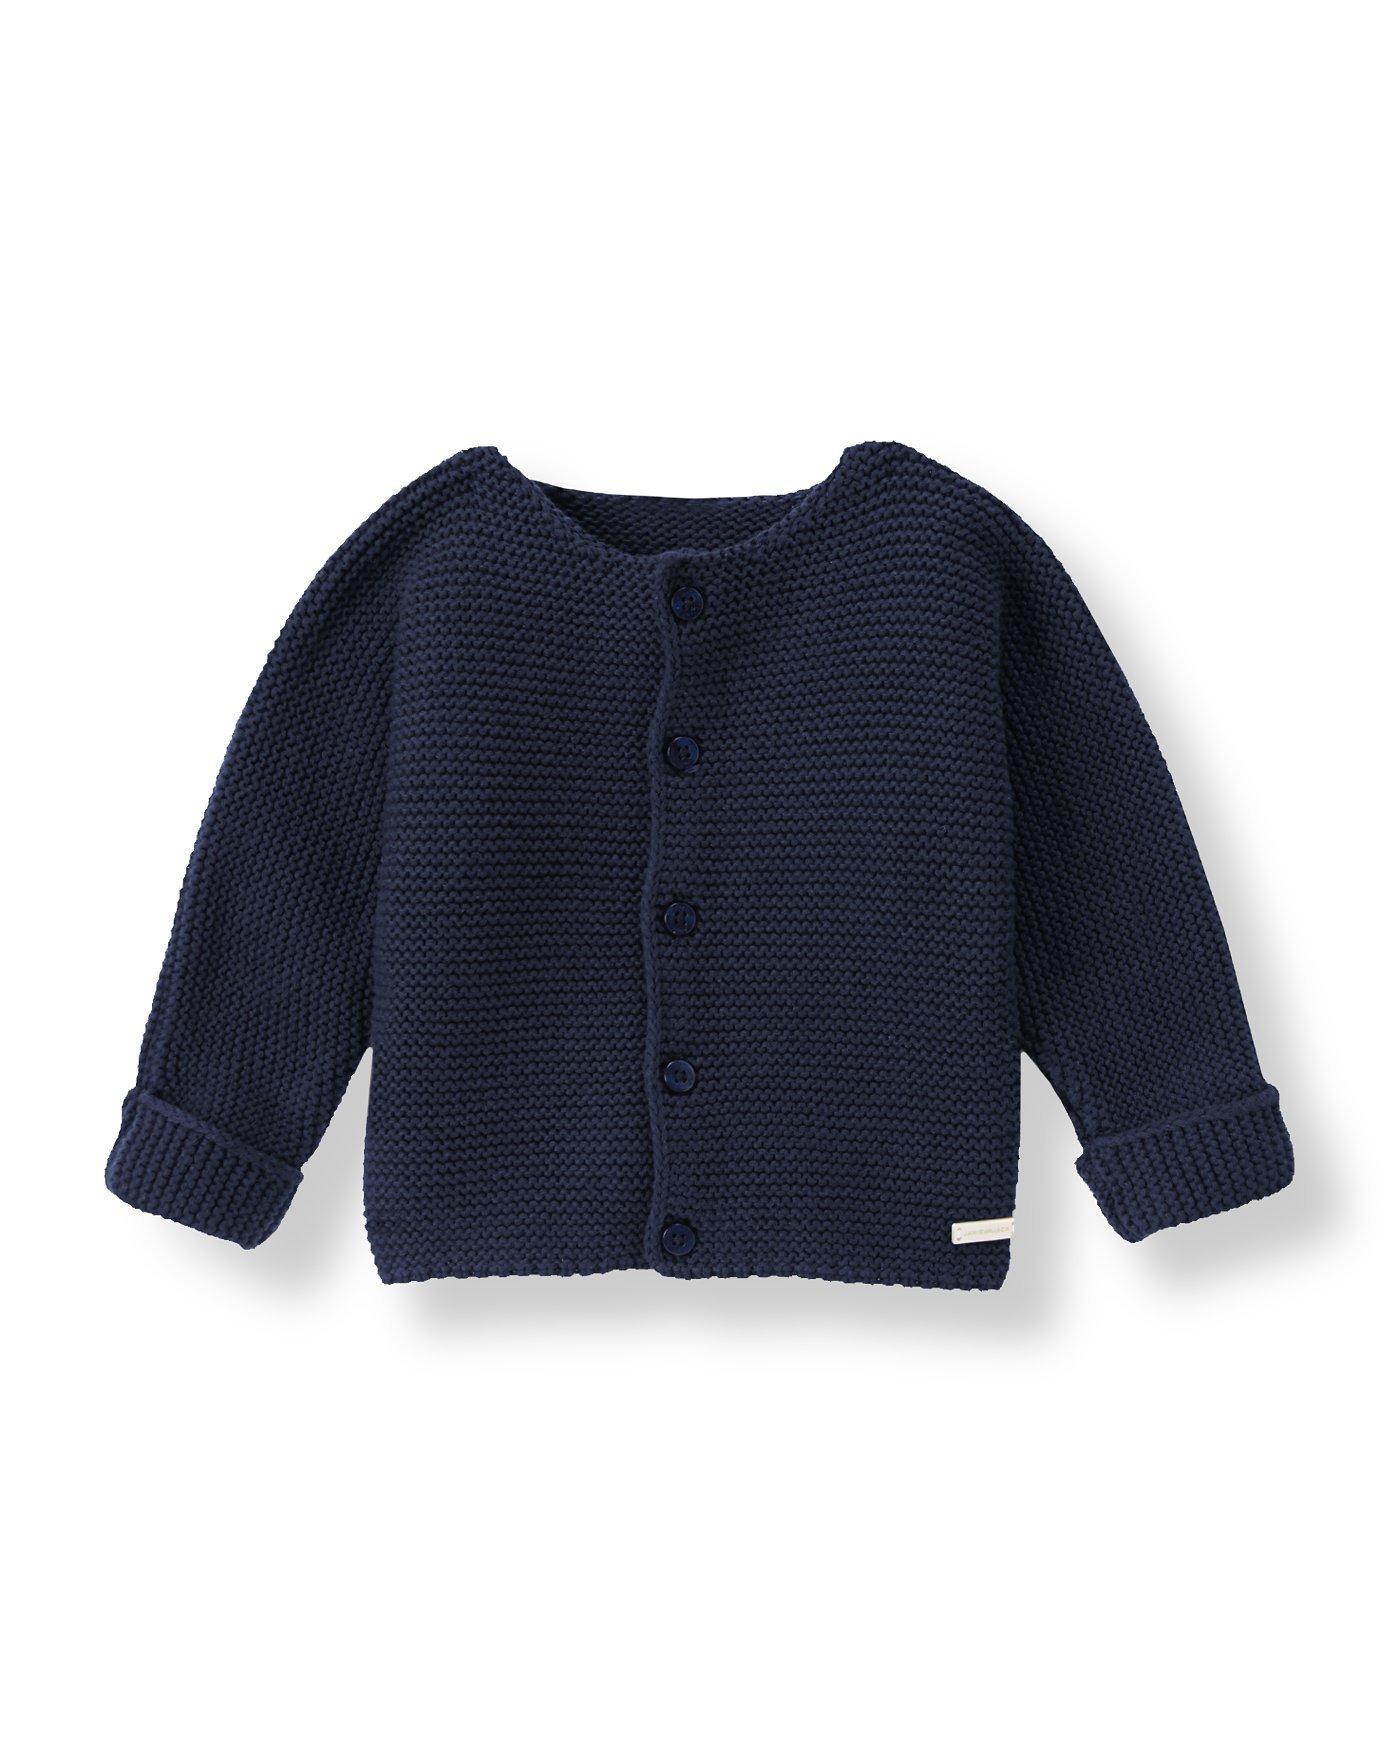 Baby Boy Navy Textured Knit Cardigan at JanieandJack